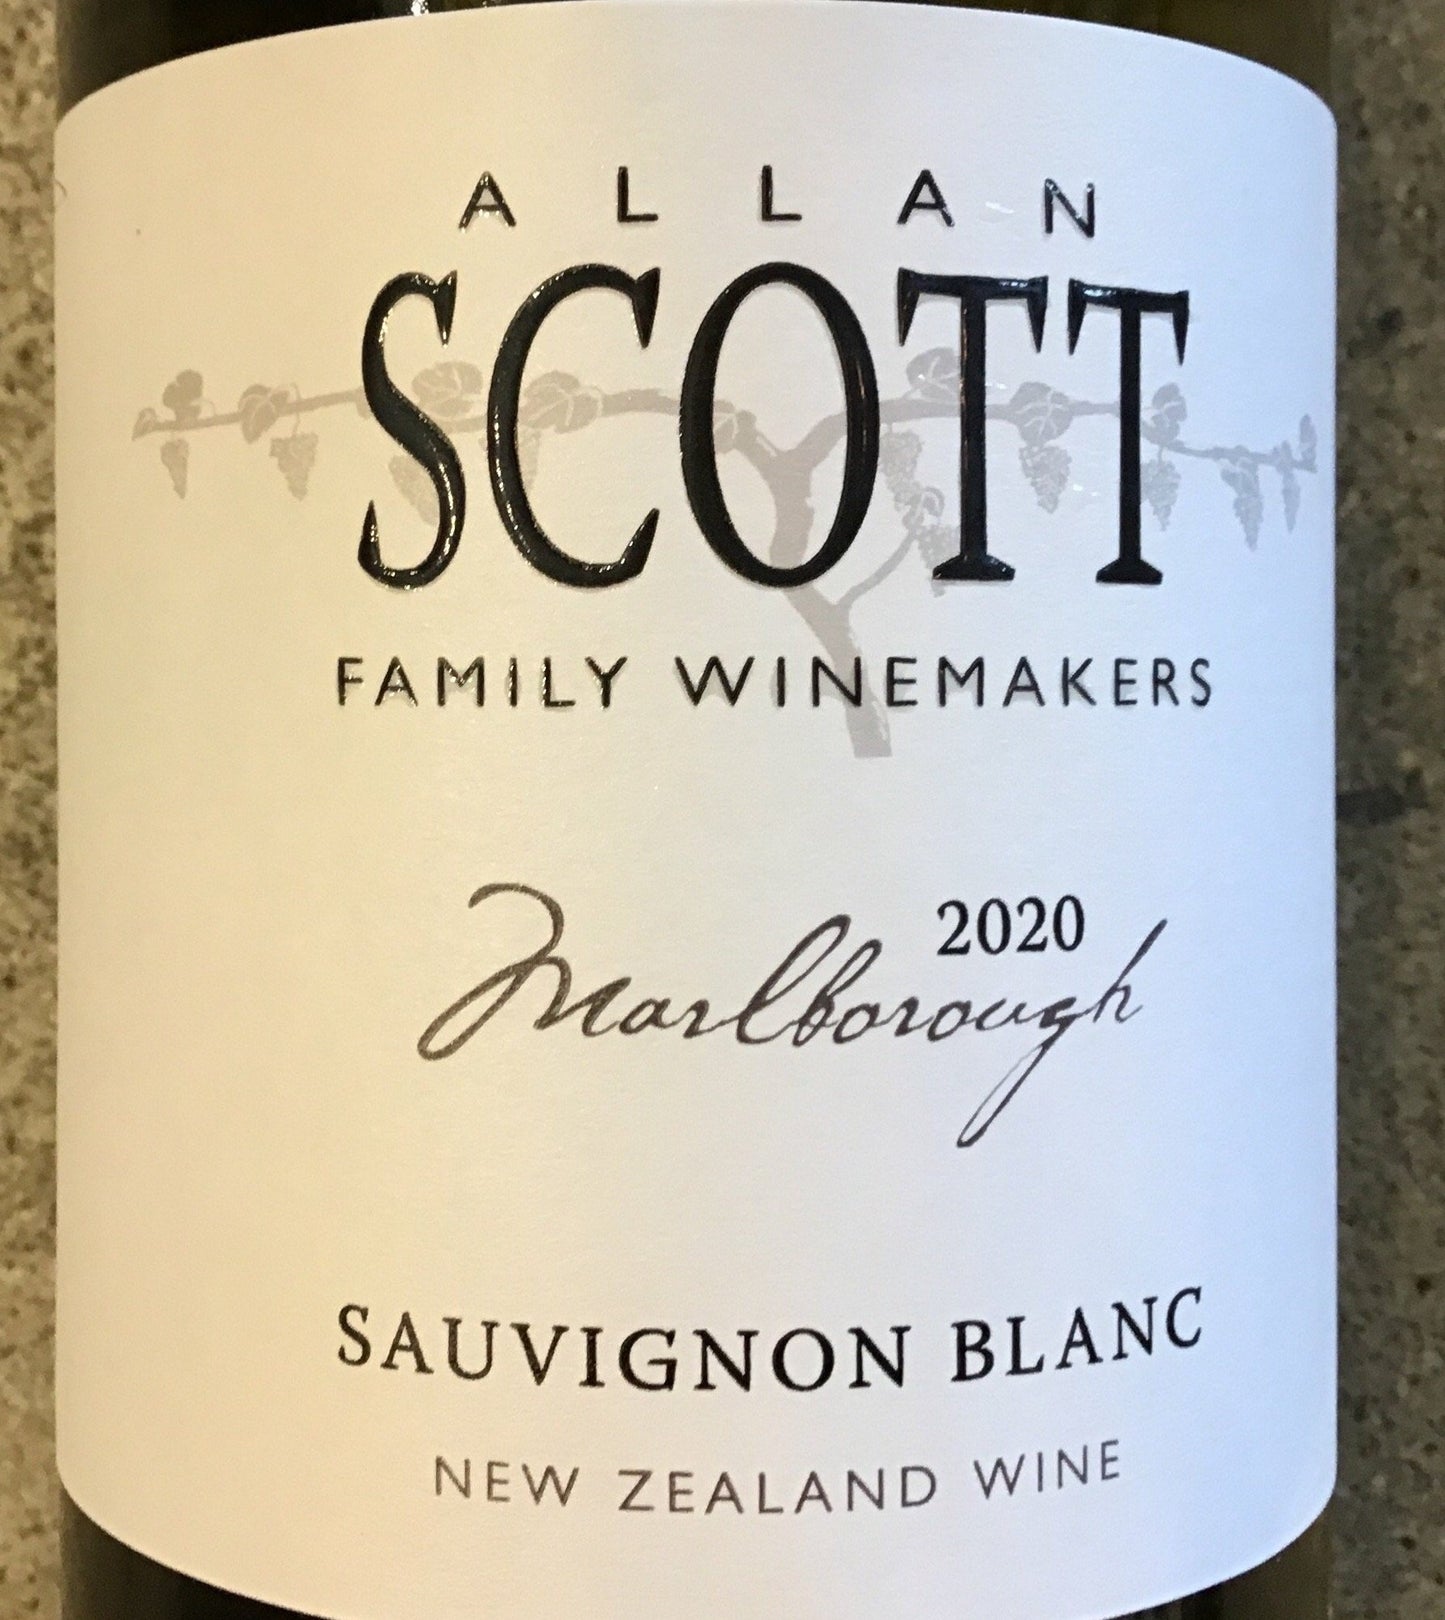 Allan Scott Sauvignon Blanc